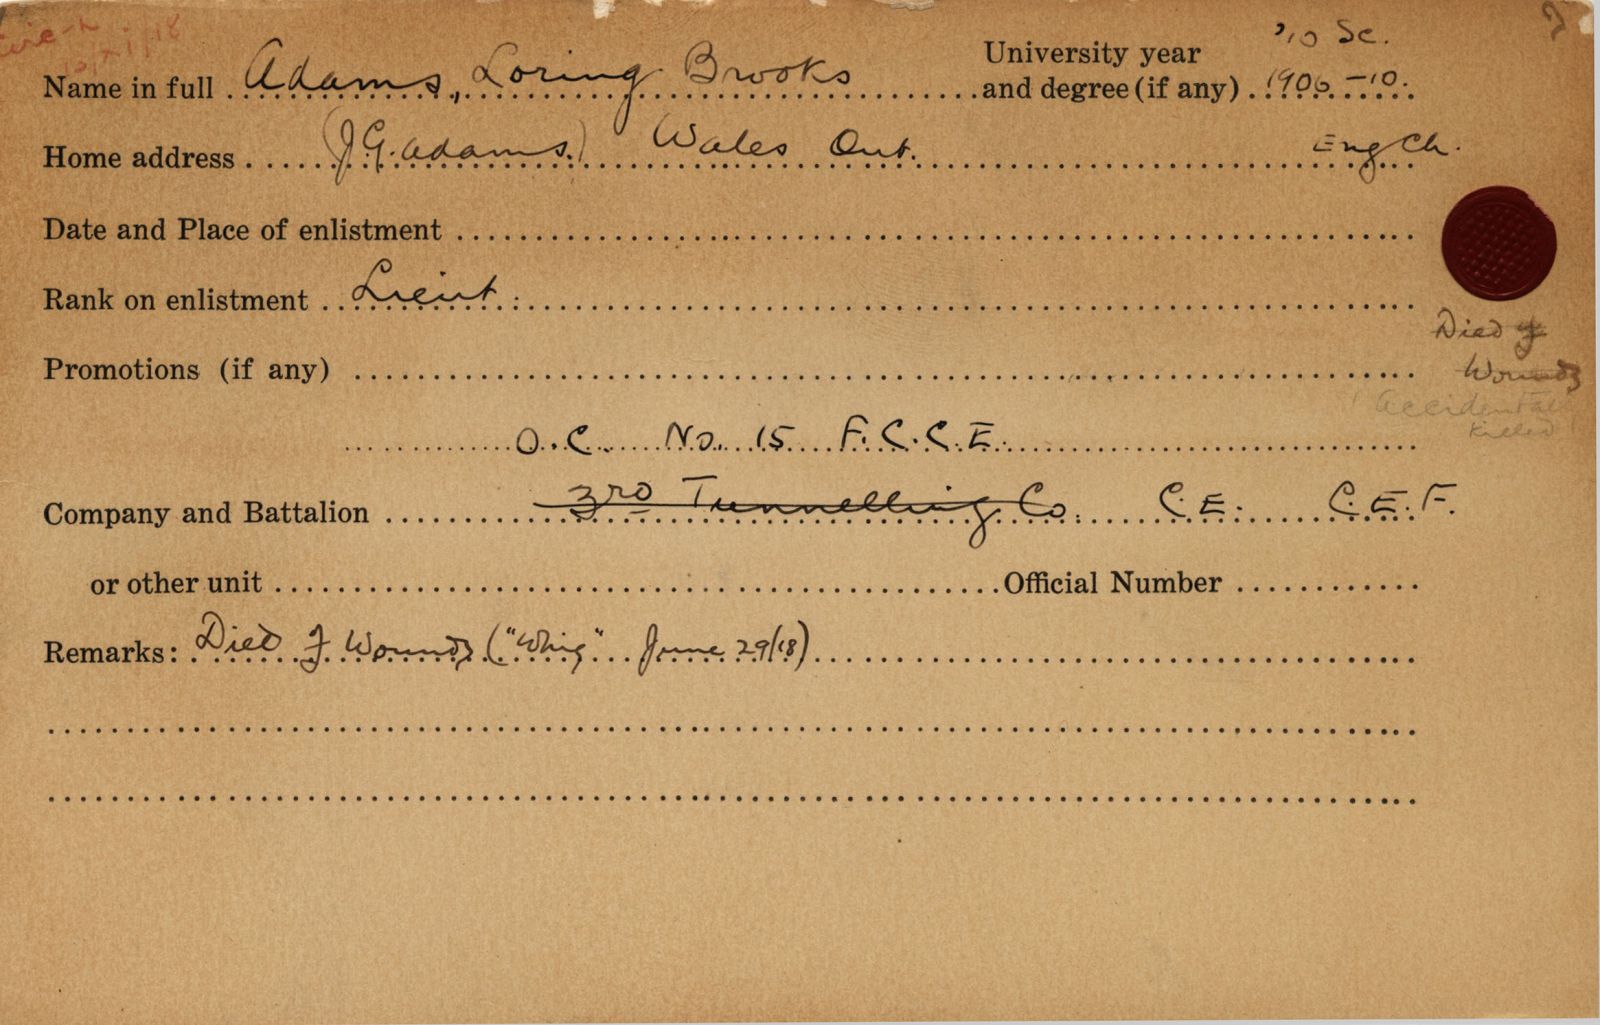 "University Military Record Card of Adams"